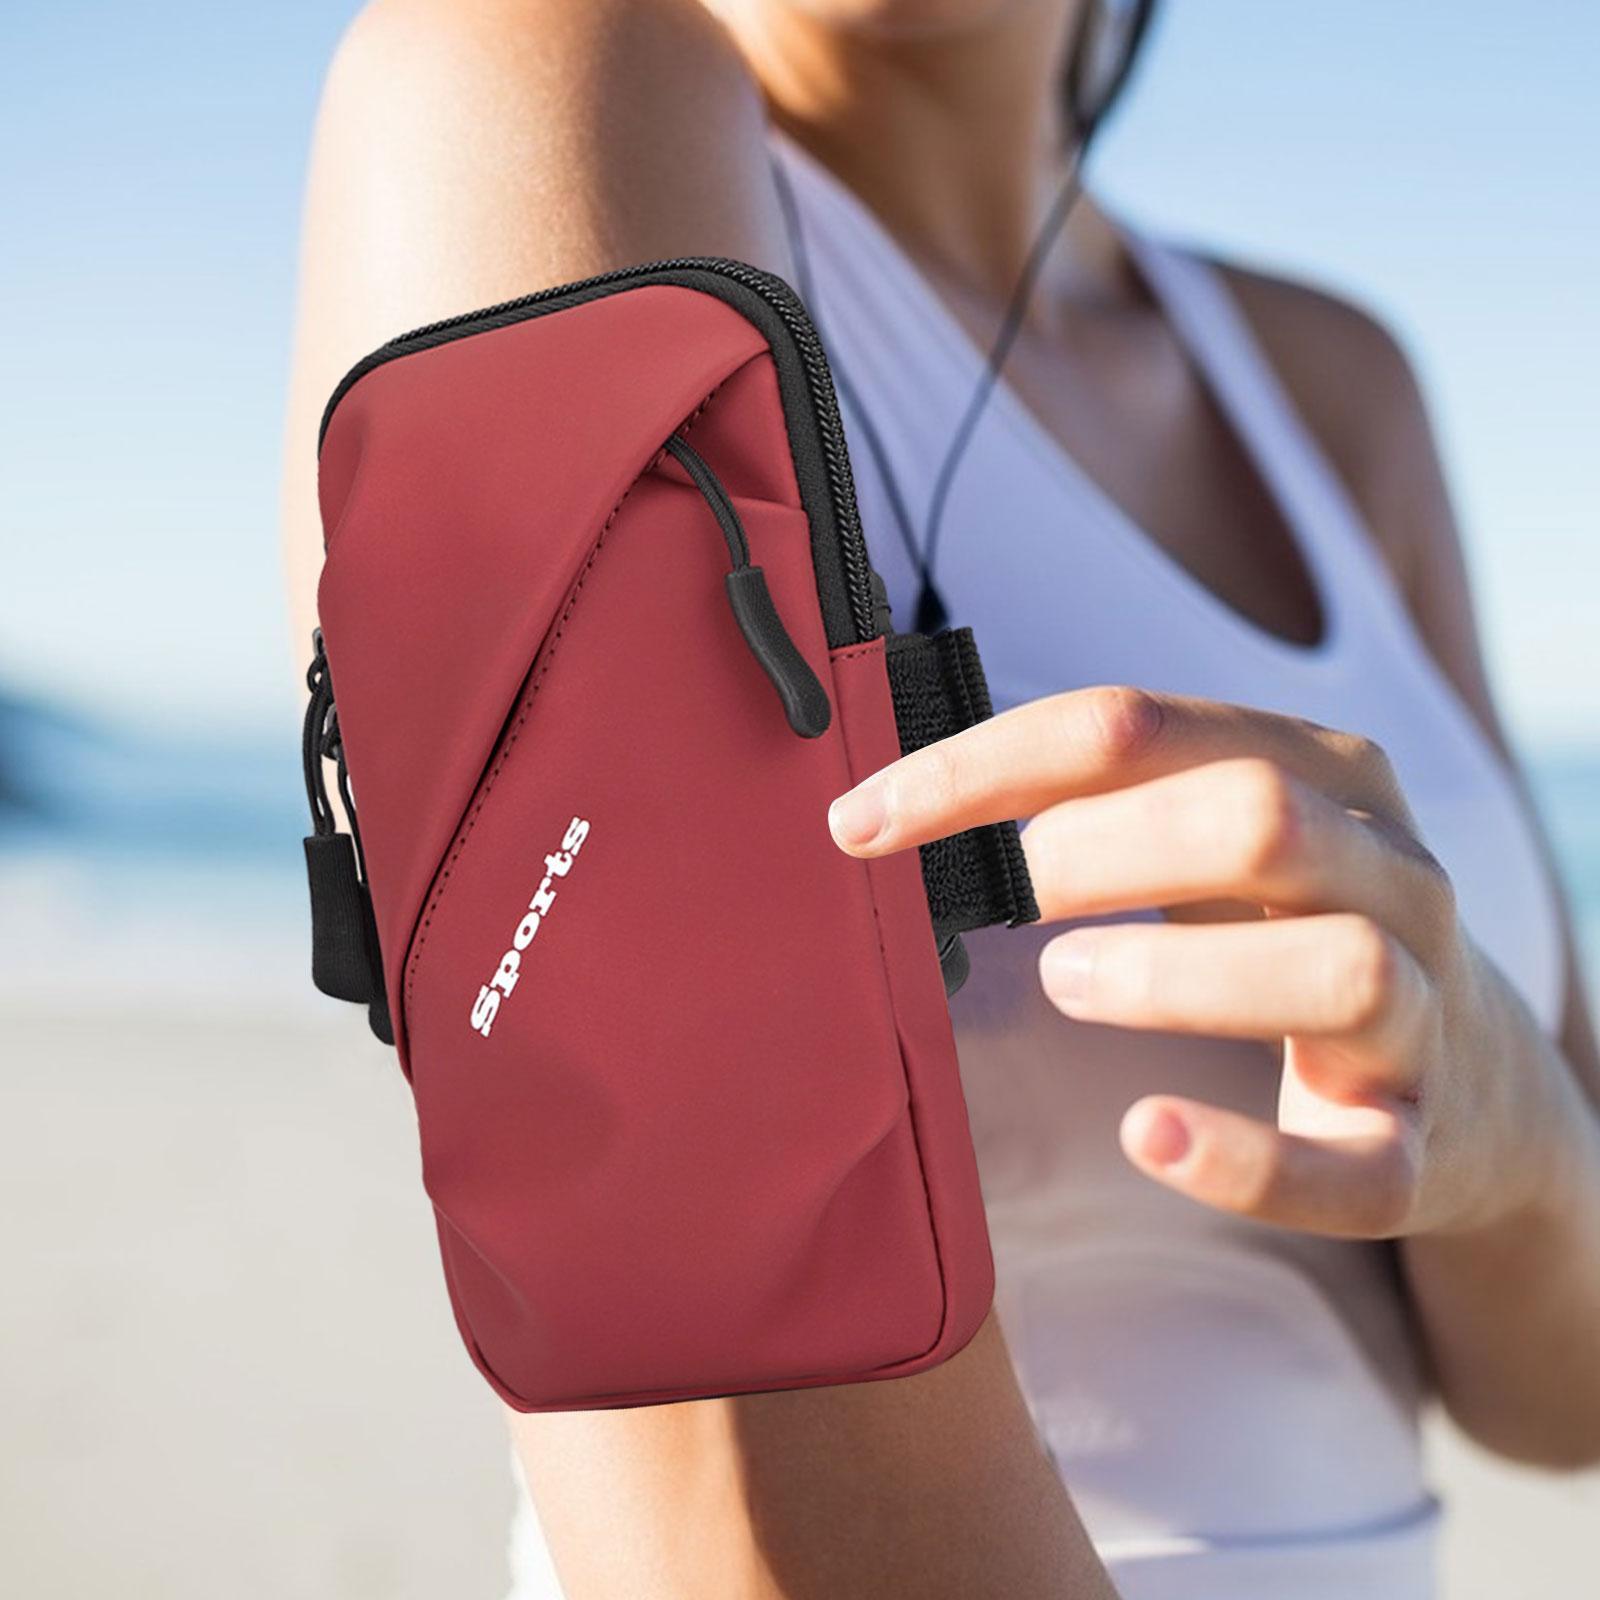 Phone Armband Bag Sports Arm Bag Cellphone Holder Gym Armbands Bag Phone Wristband for Running Jogging Workout Walking